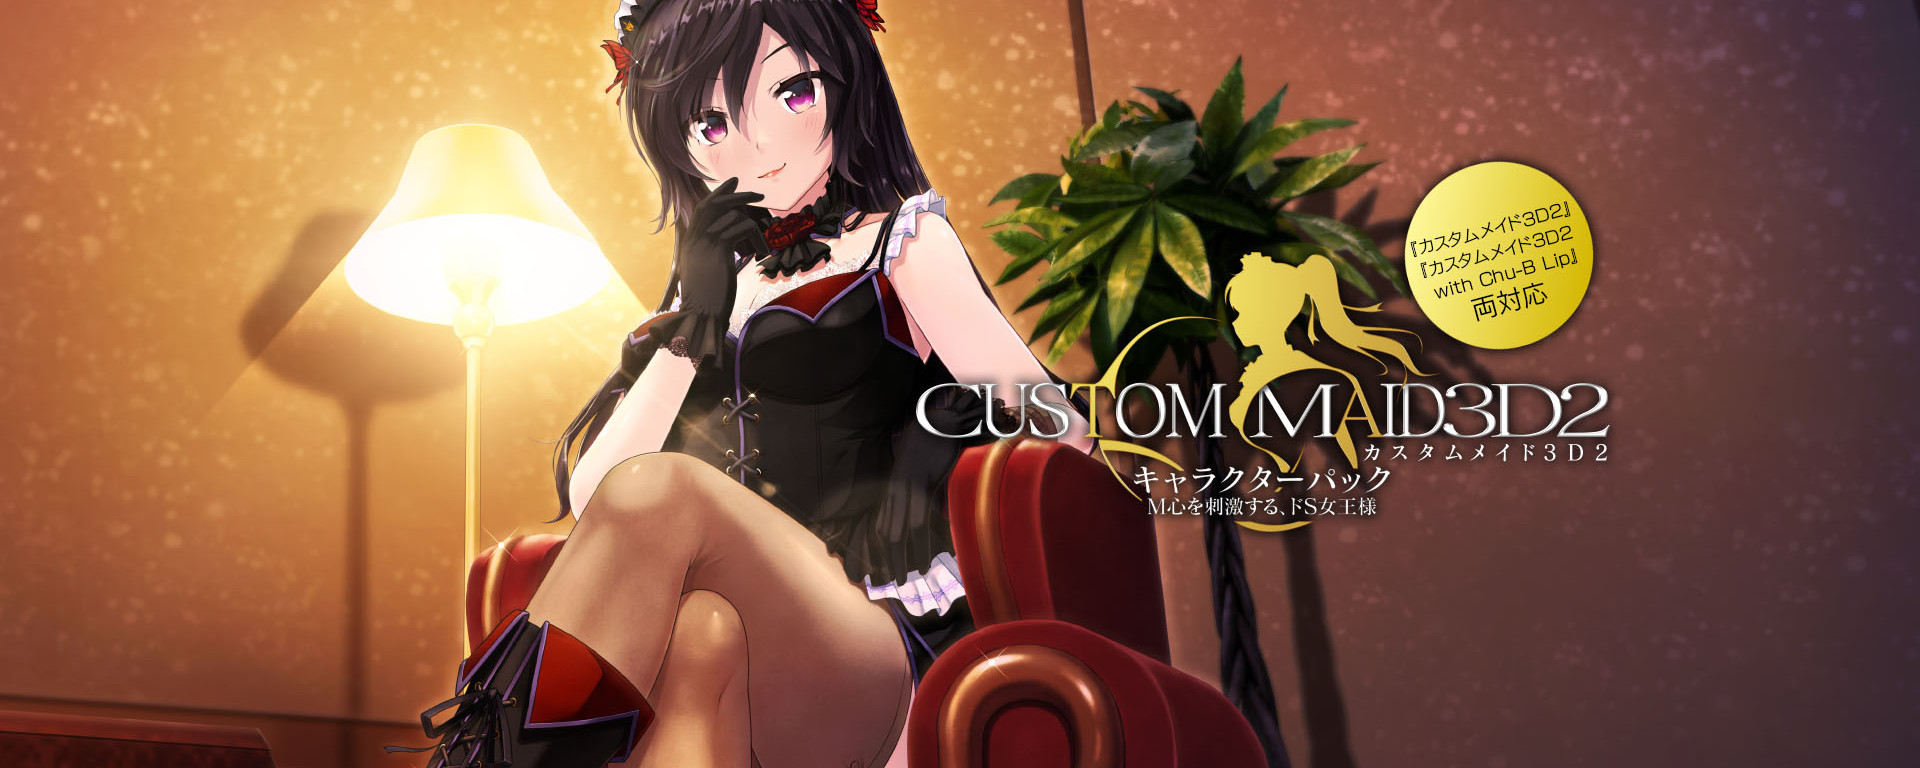 Custom maid 3d 2 english download youtube